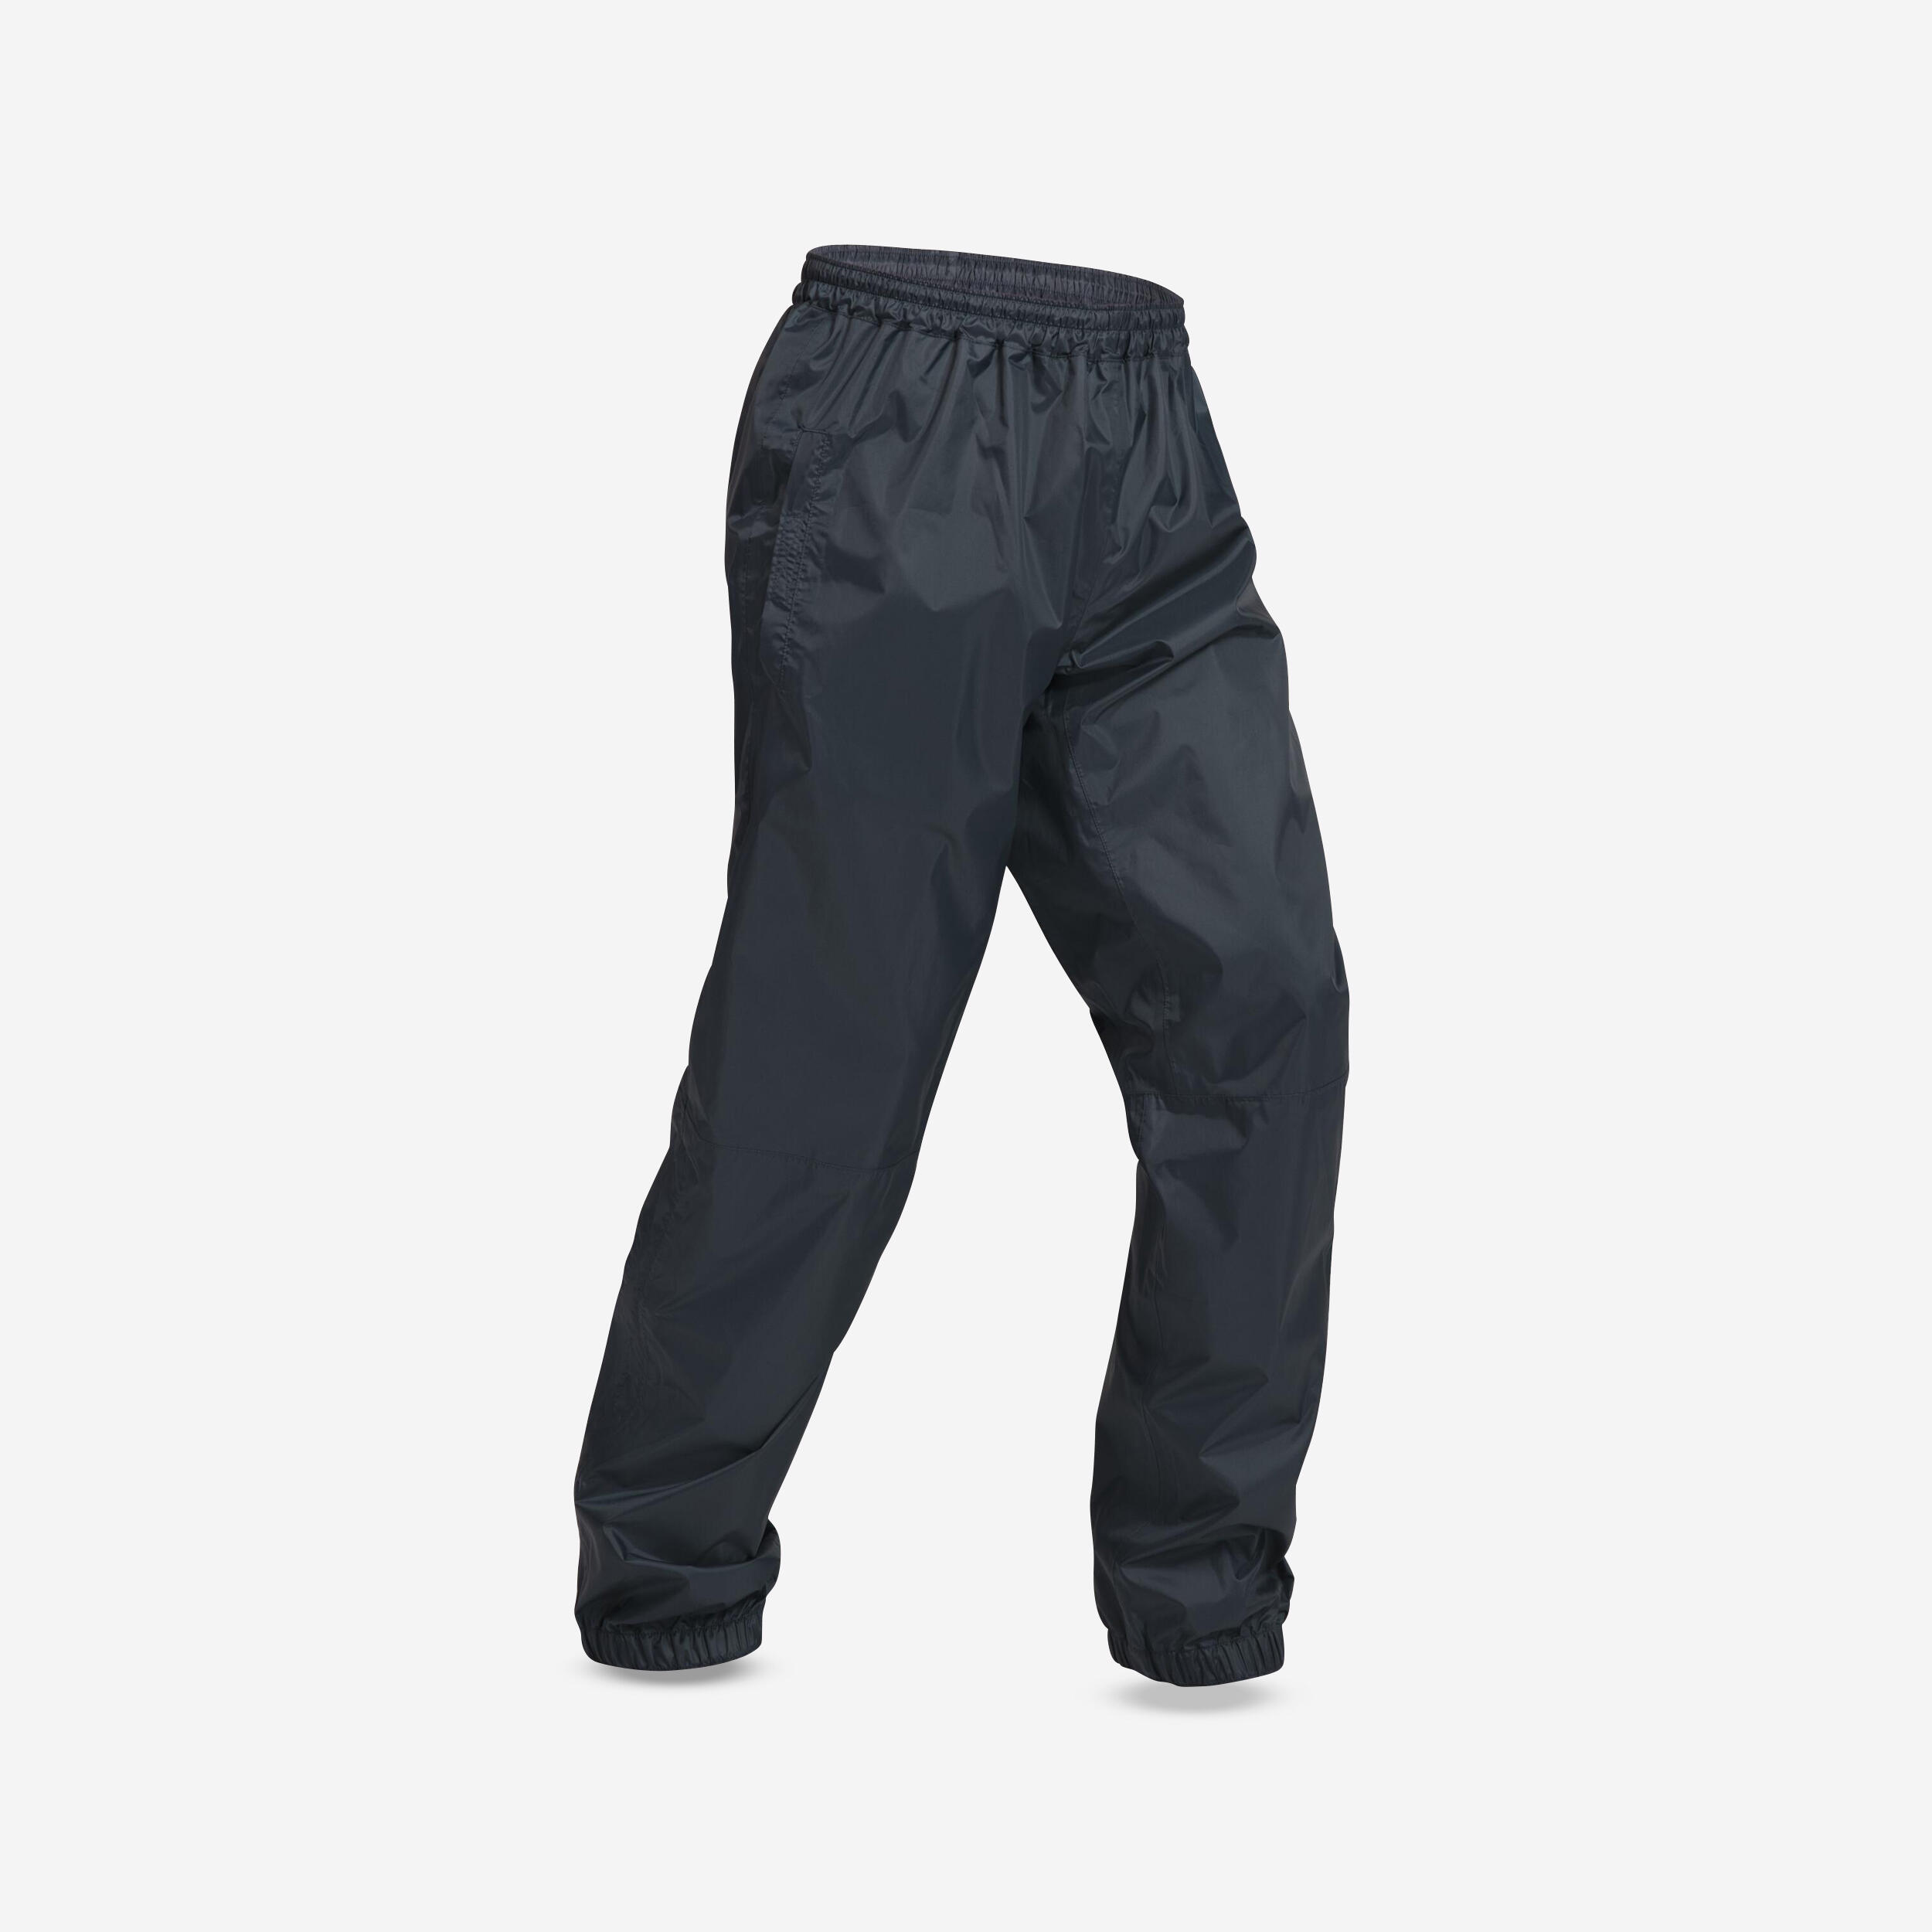 Men's waterproof trousers - MT500 - Black - Decathlon